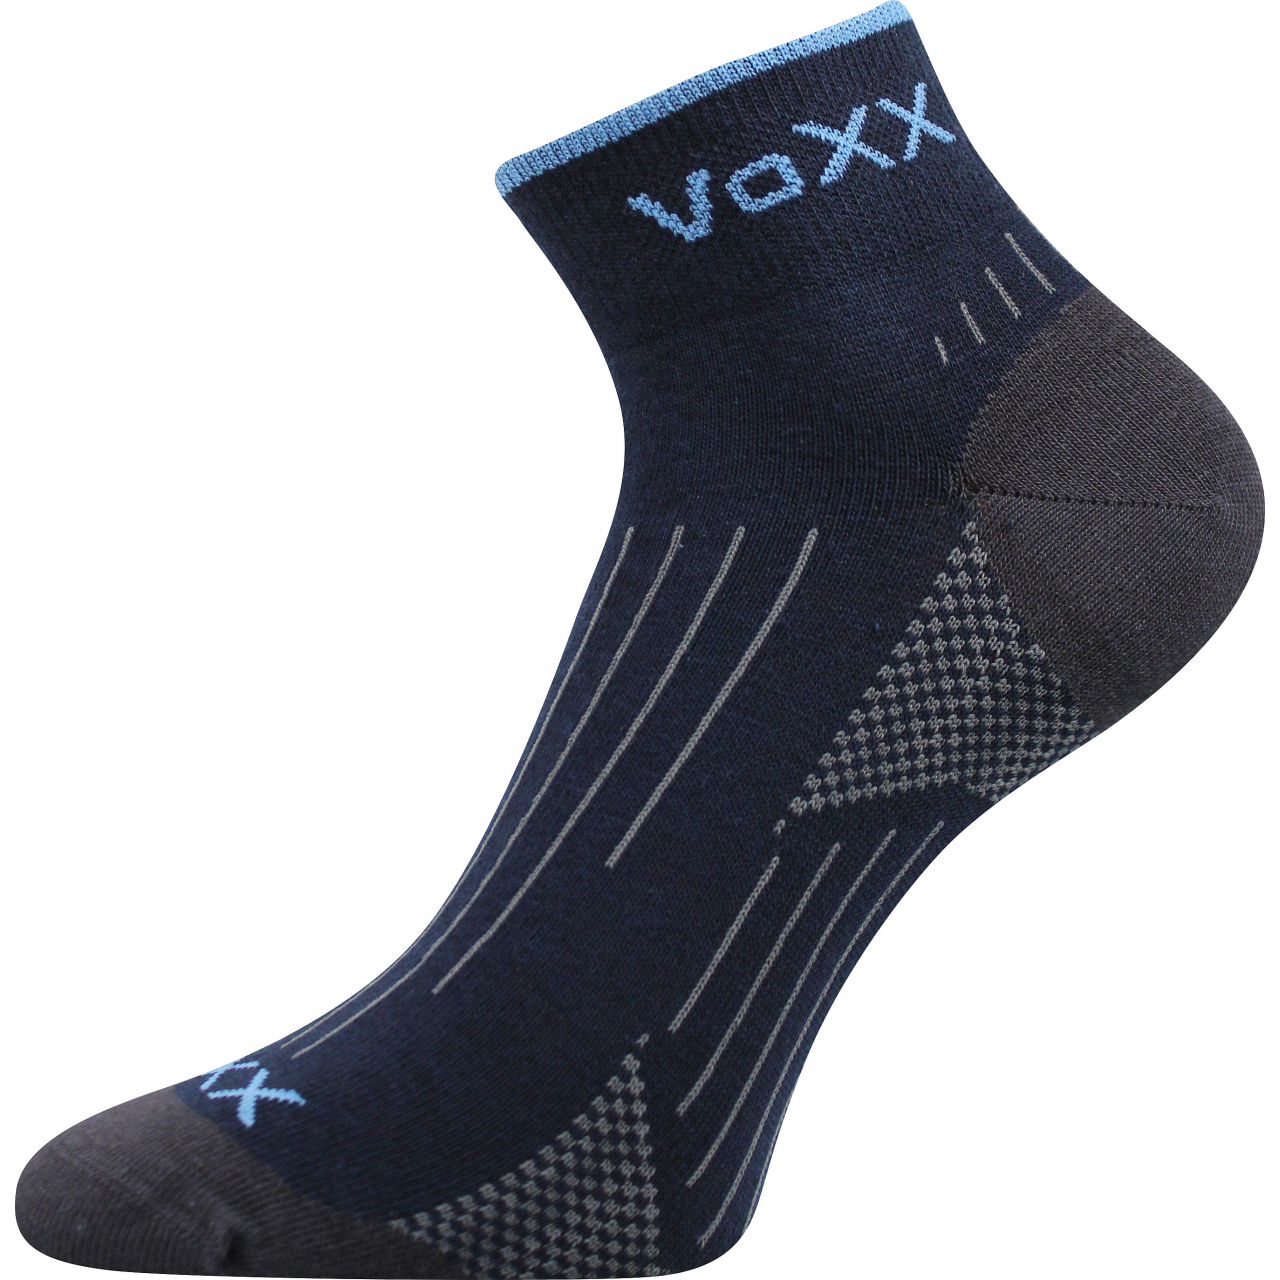 Ponožky tenké unisex Voxx Azul - tmavě modré, 39-42